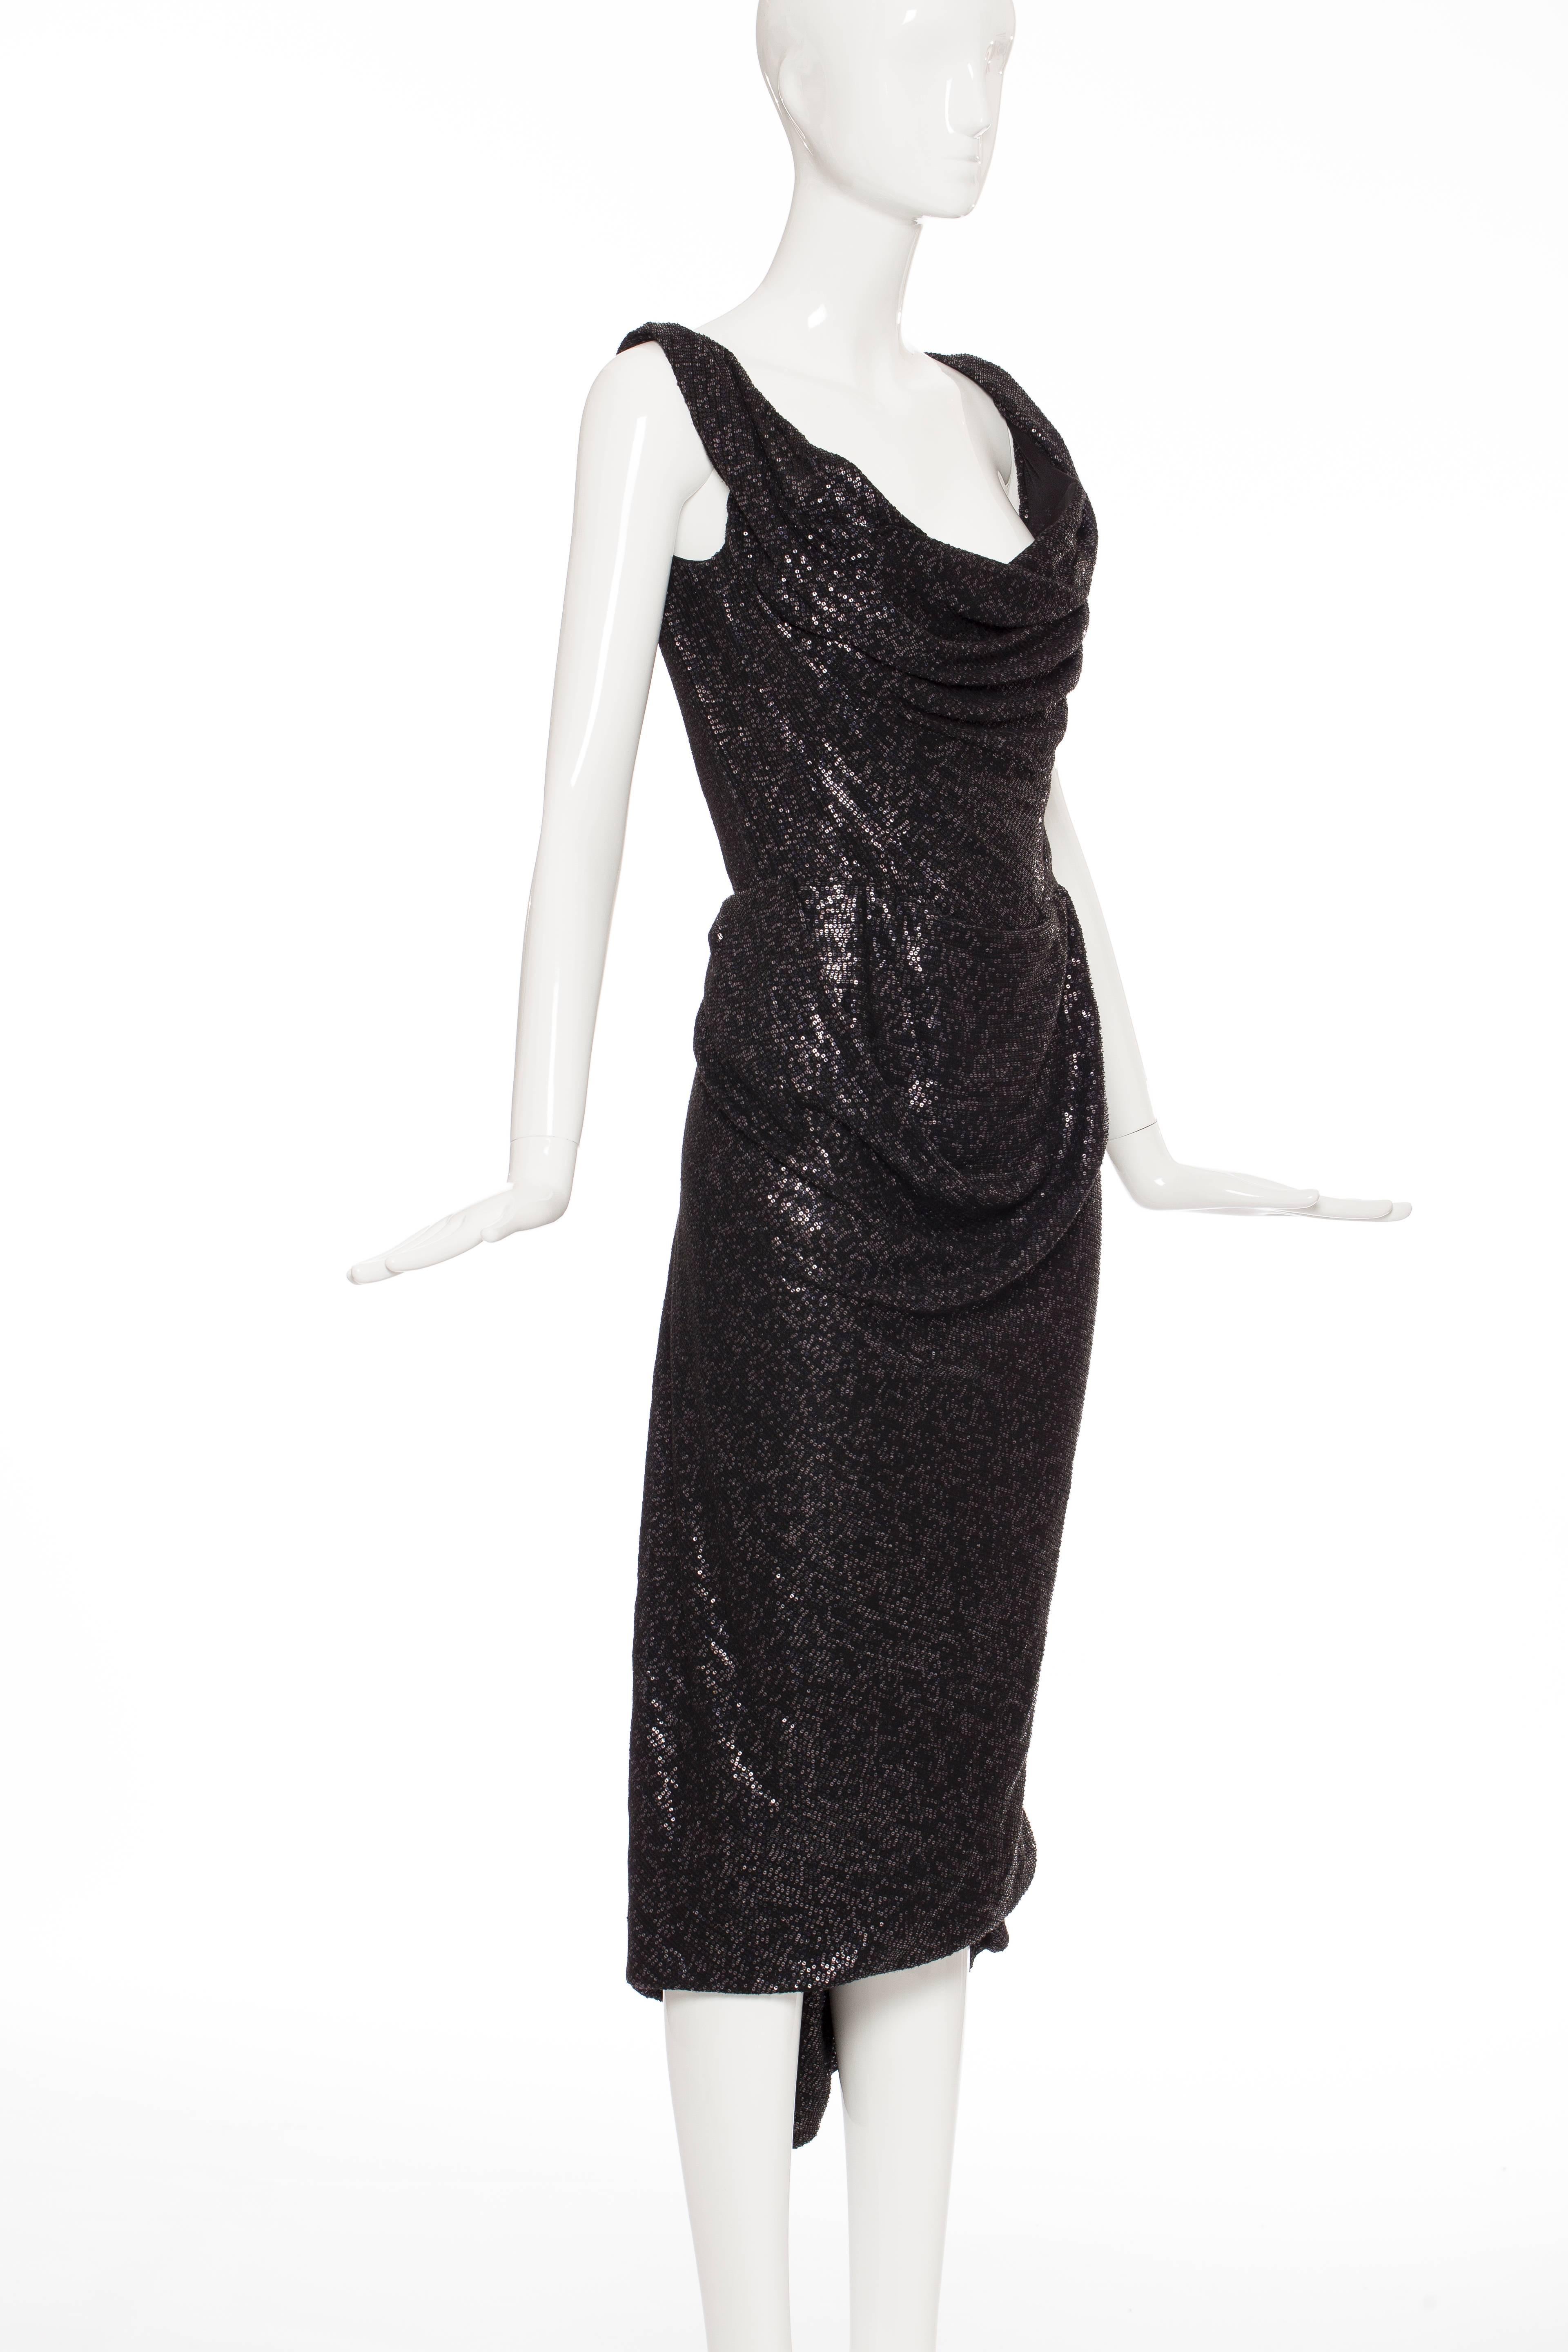 Vivienne Westwood Gold Label Black Sequined Evening Dress, Autumn - Winter 2011 4